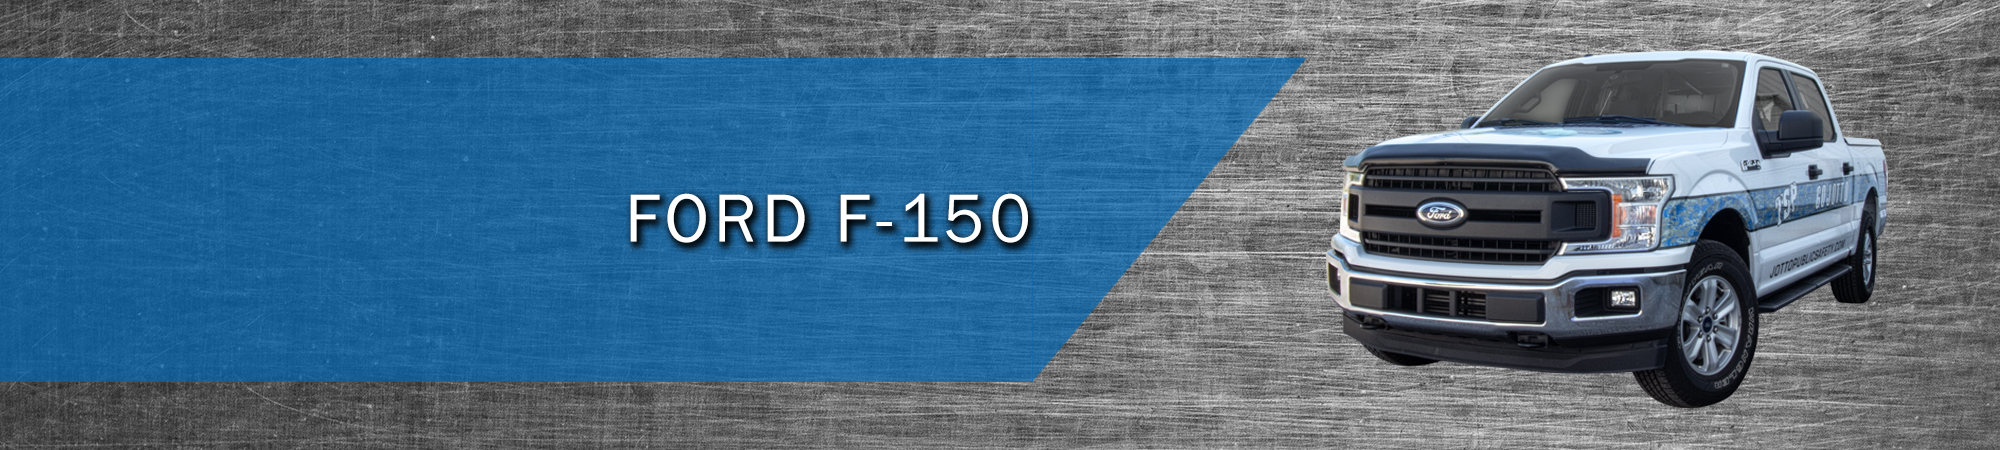 Ford F-150 SSV